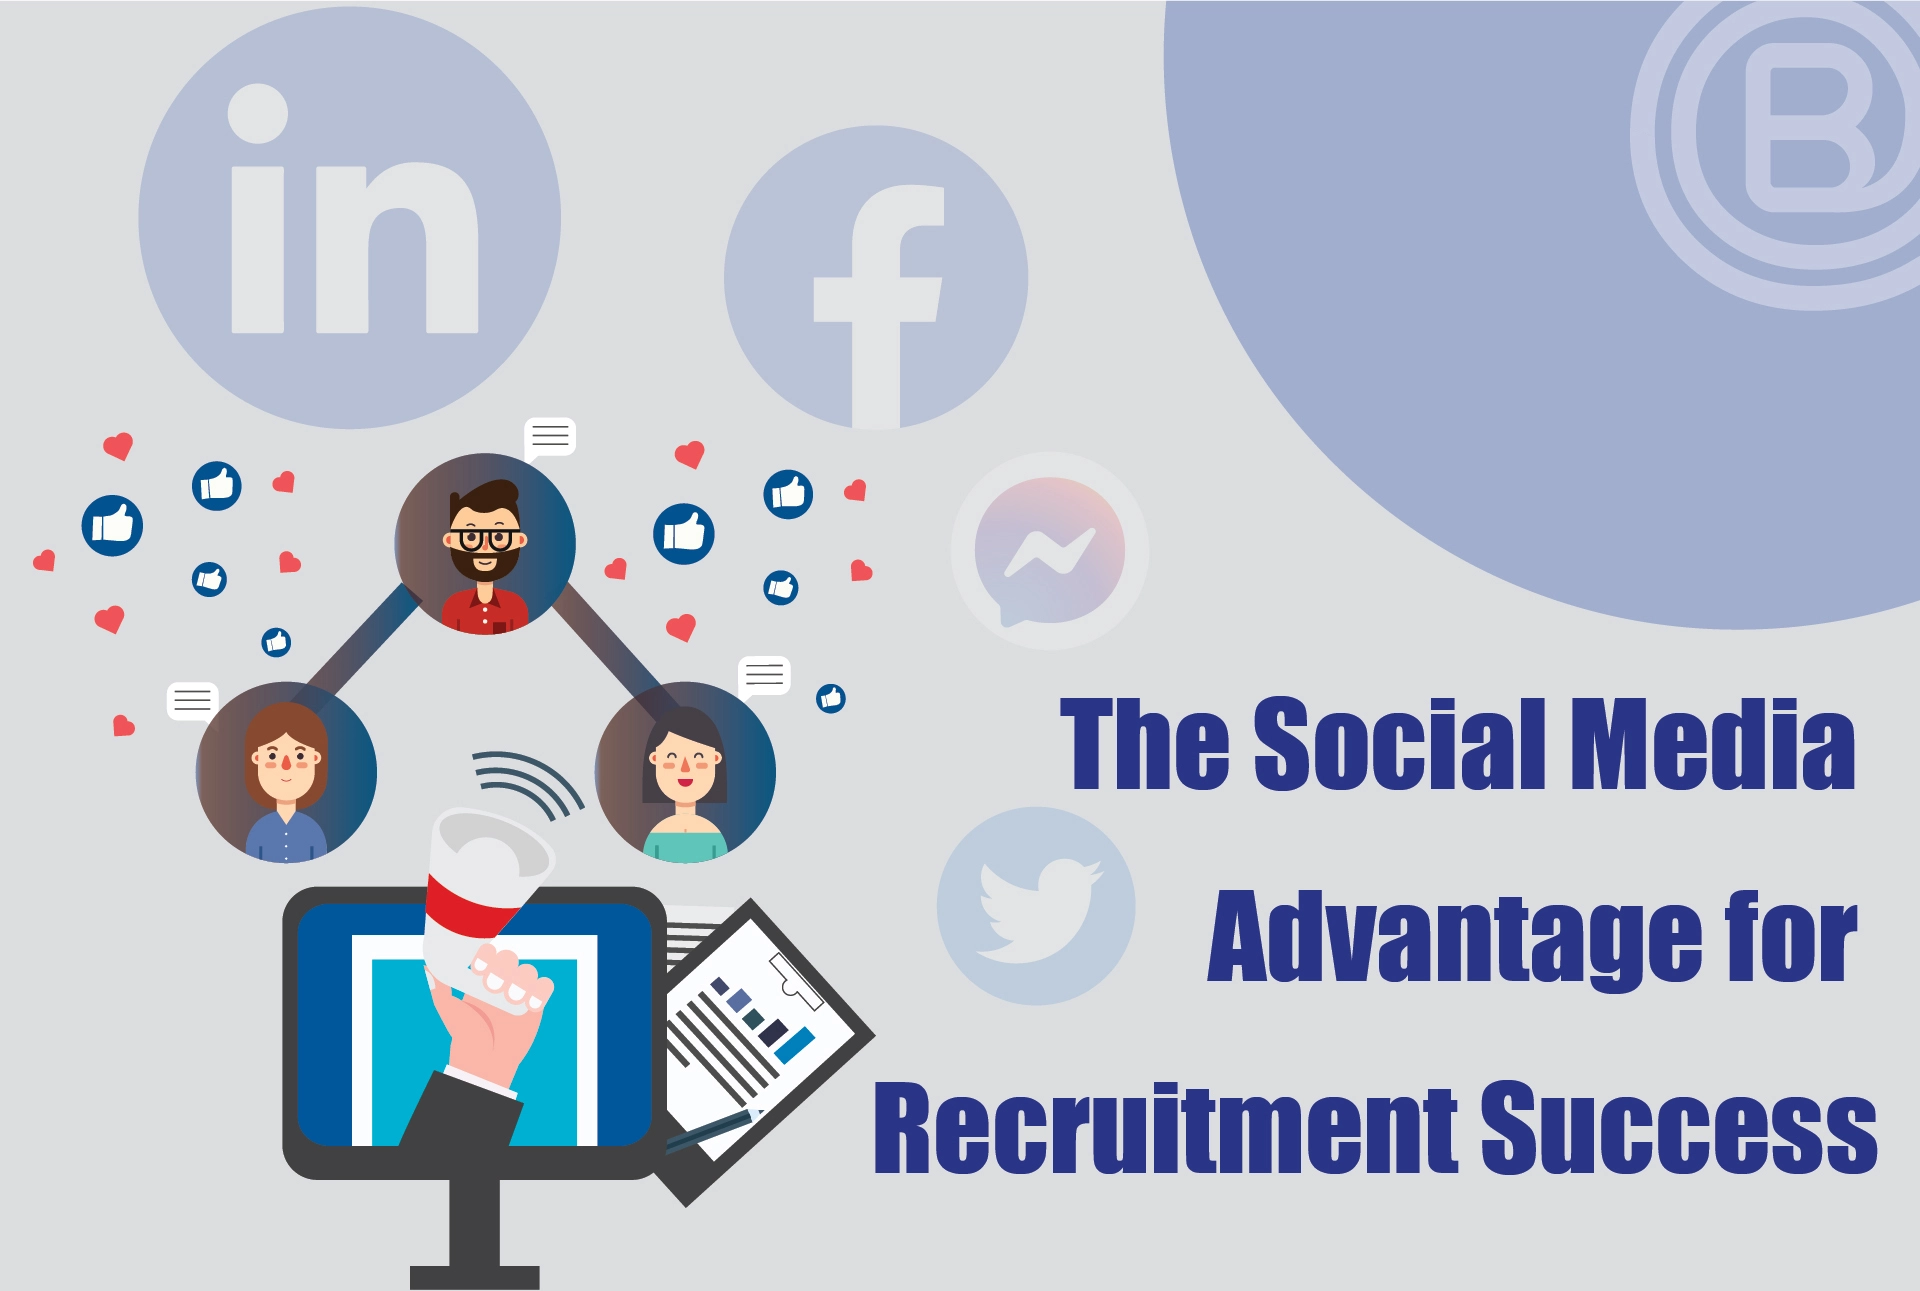 The Social Media Advantage for Recruitment Success